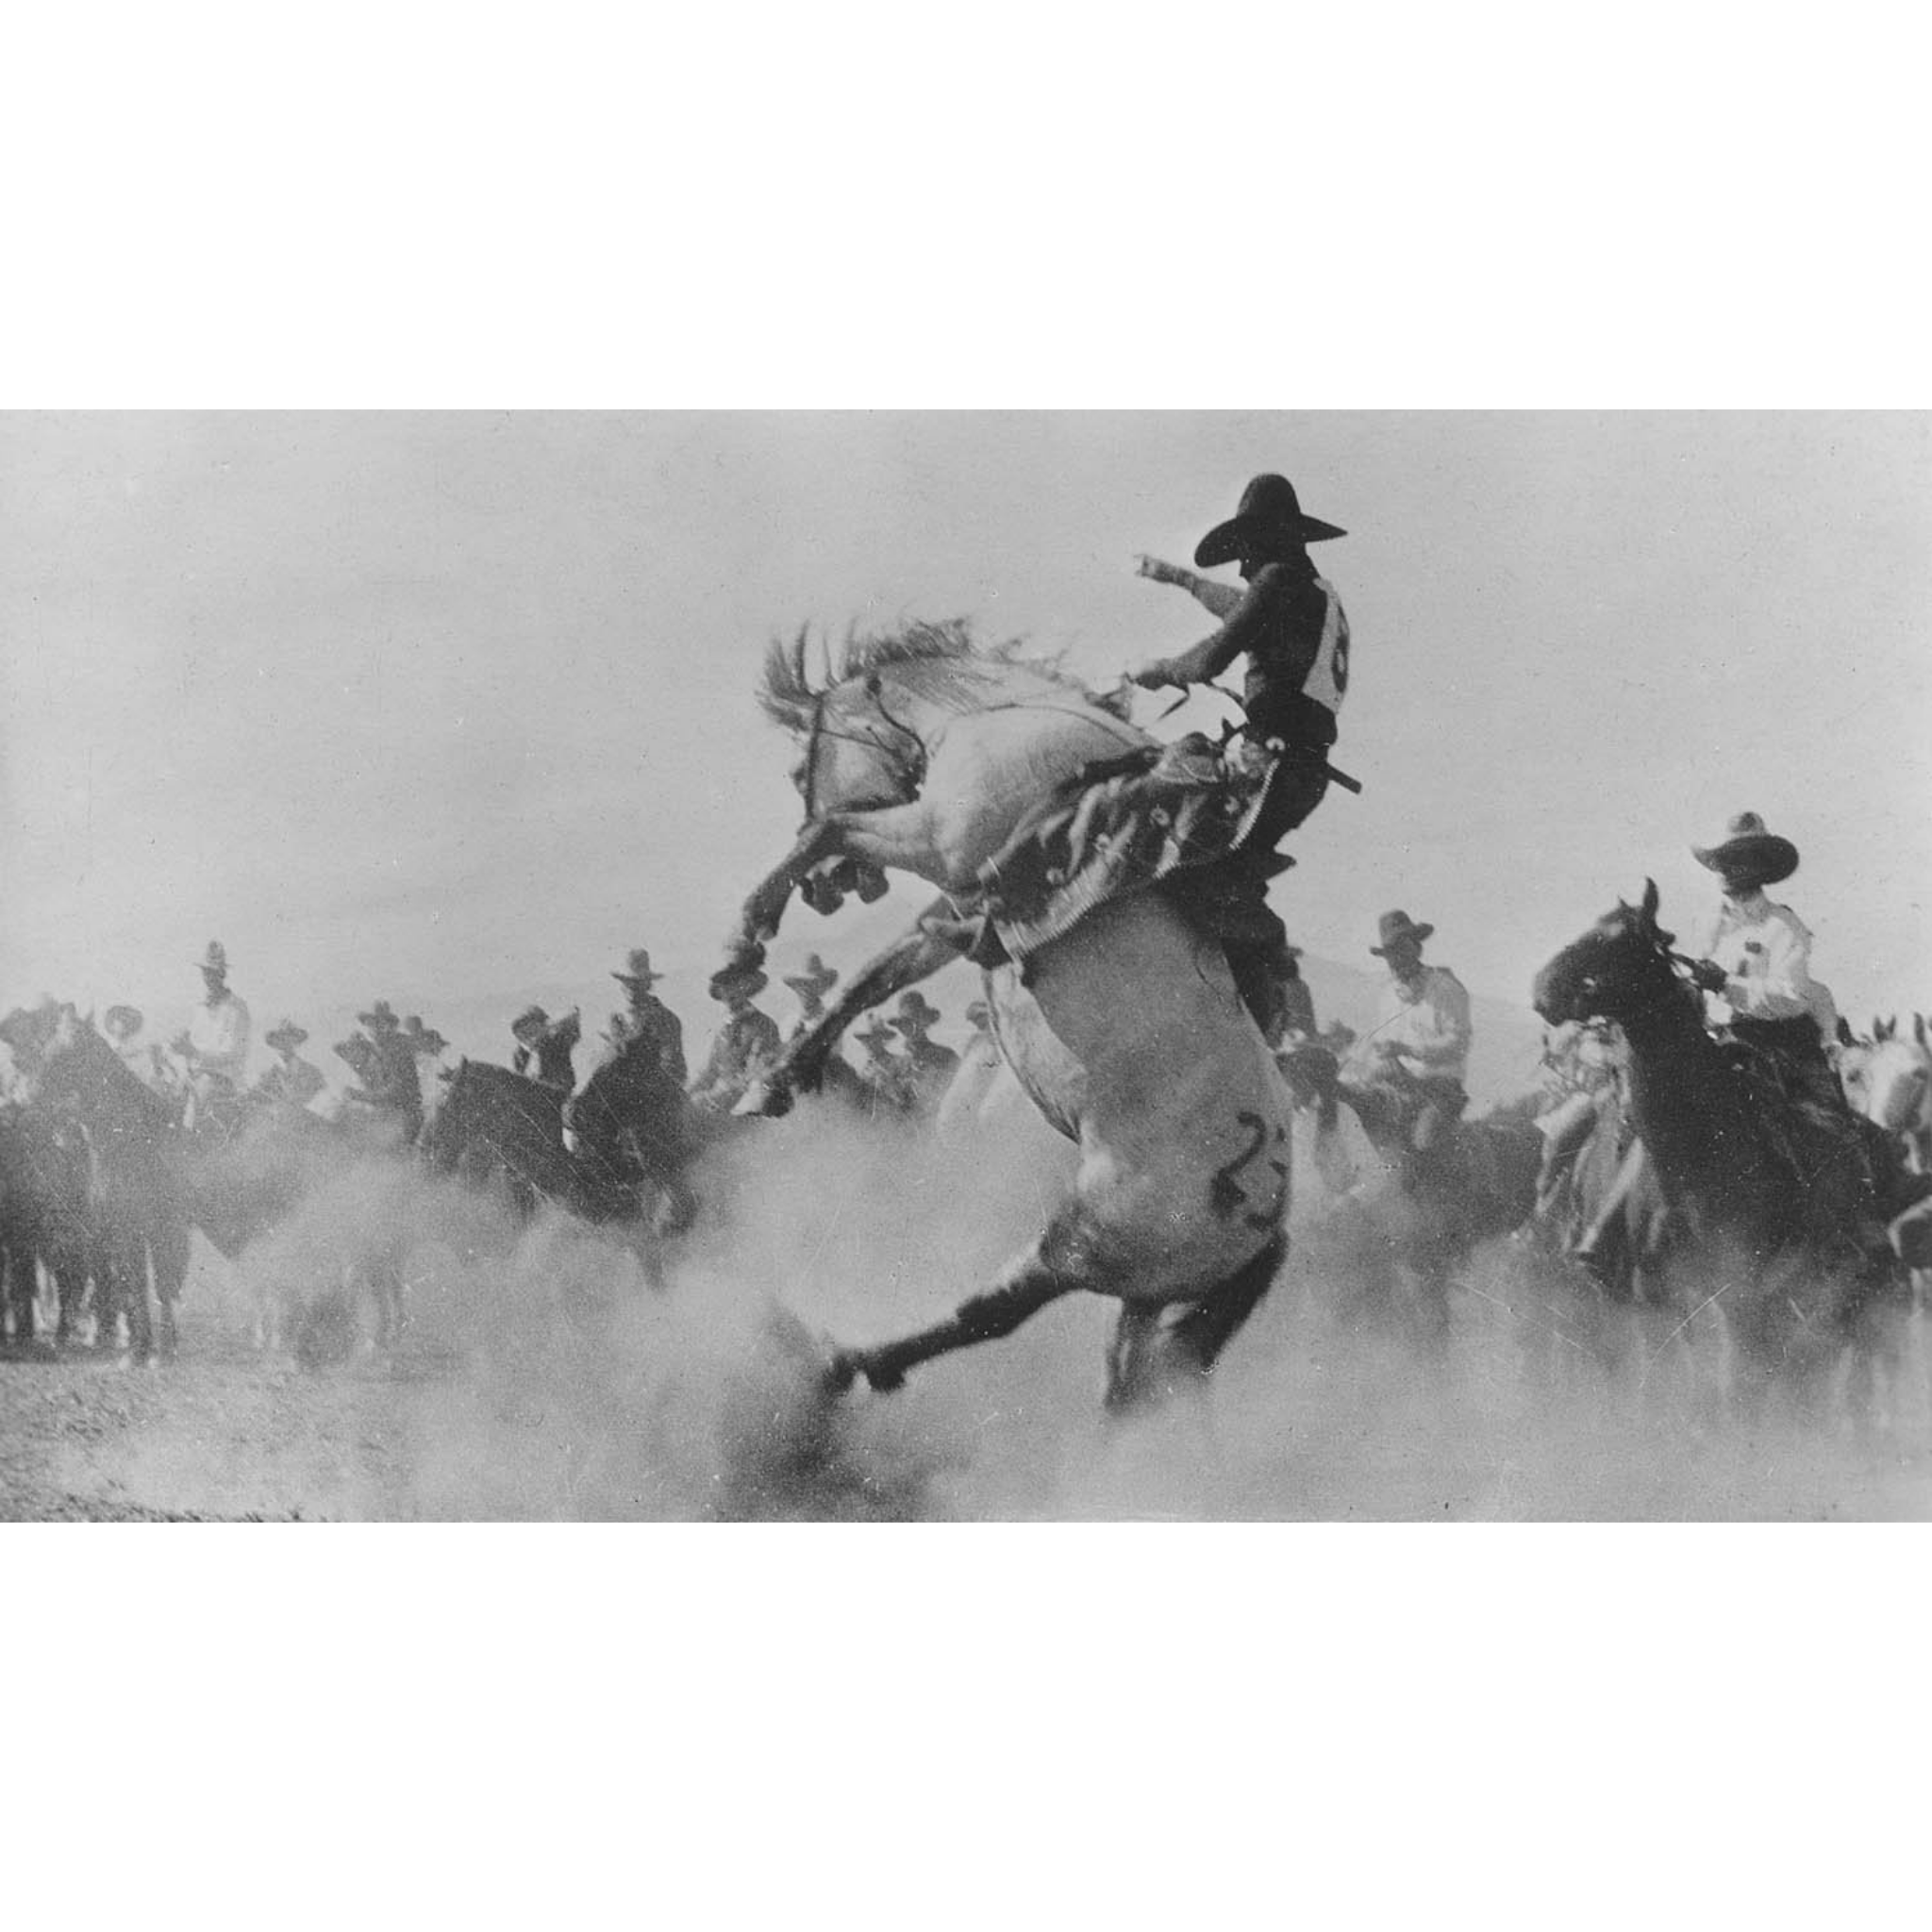 Print of Rodeo Cowboys 4 - Cowboy on Bucking Bronco